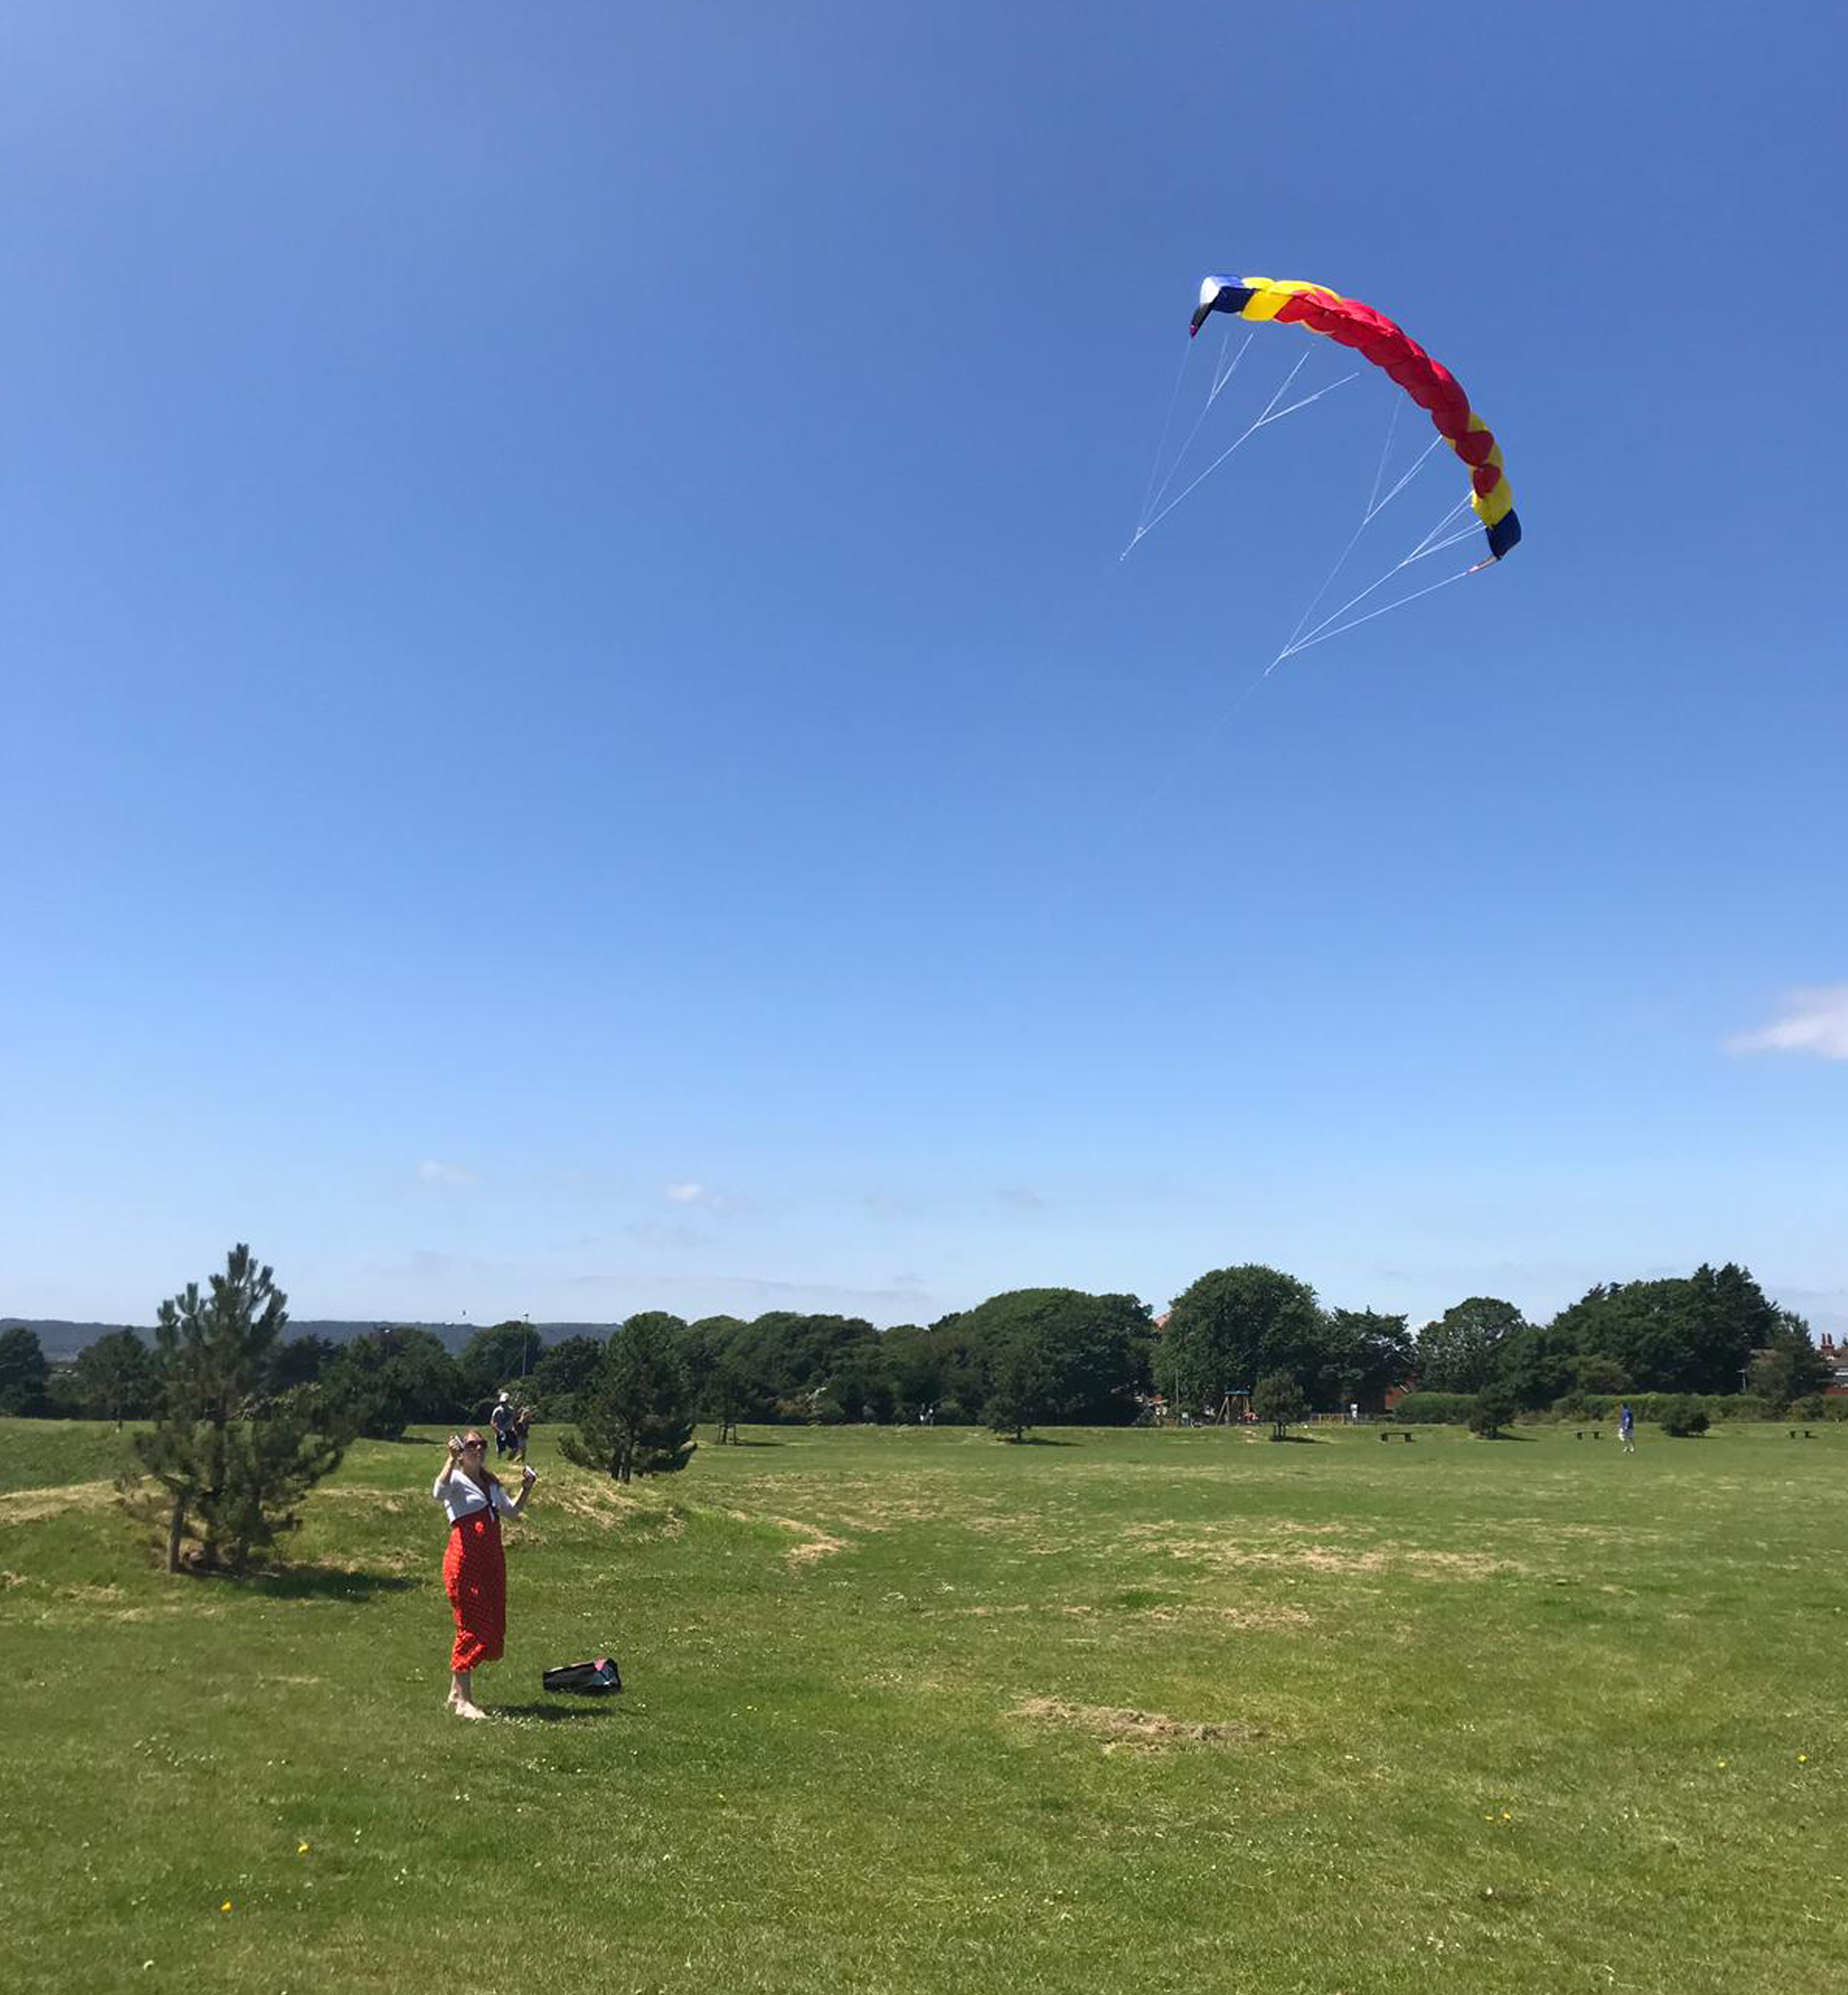 Paragliding practise in princes park